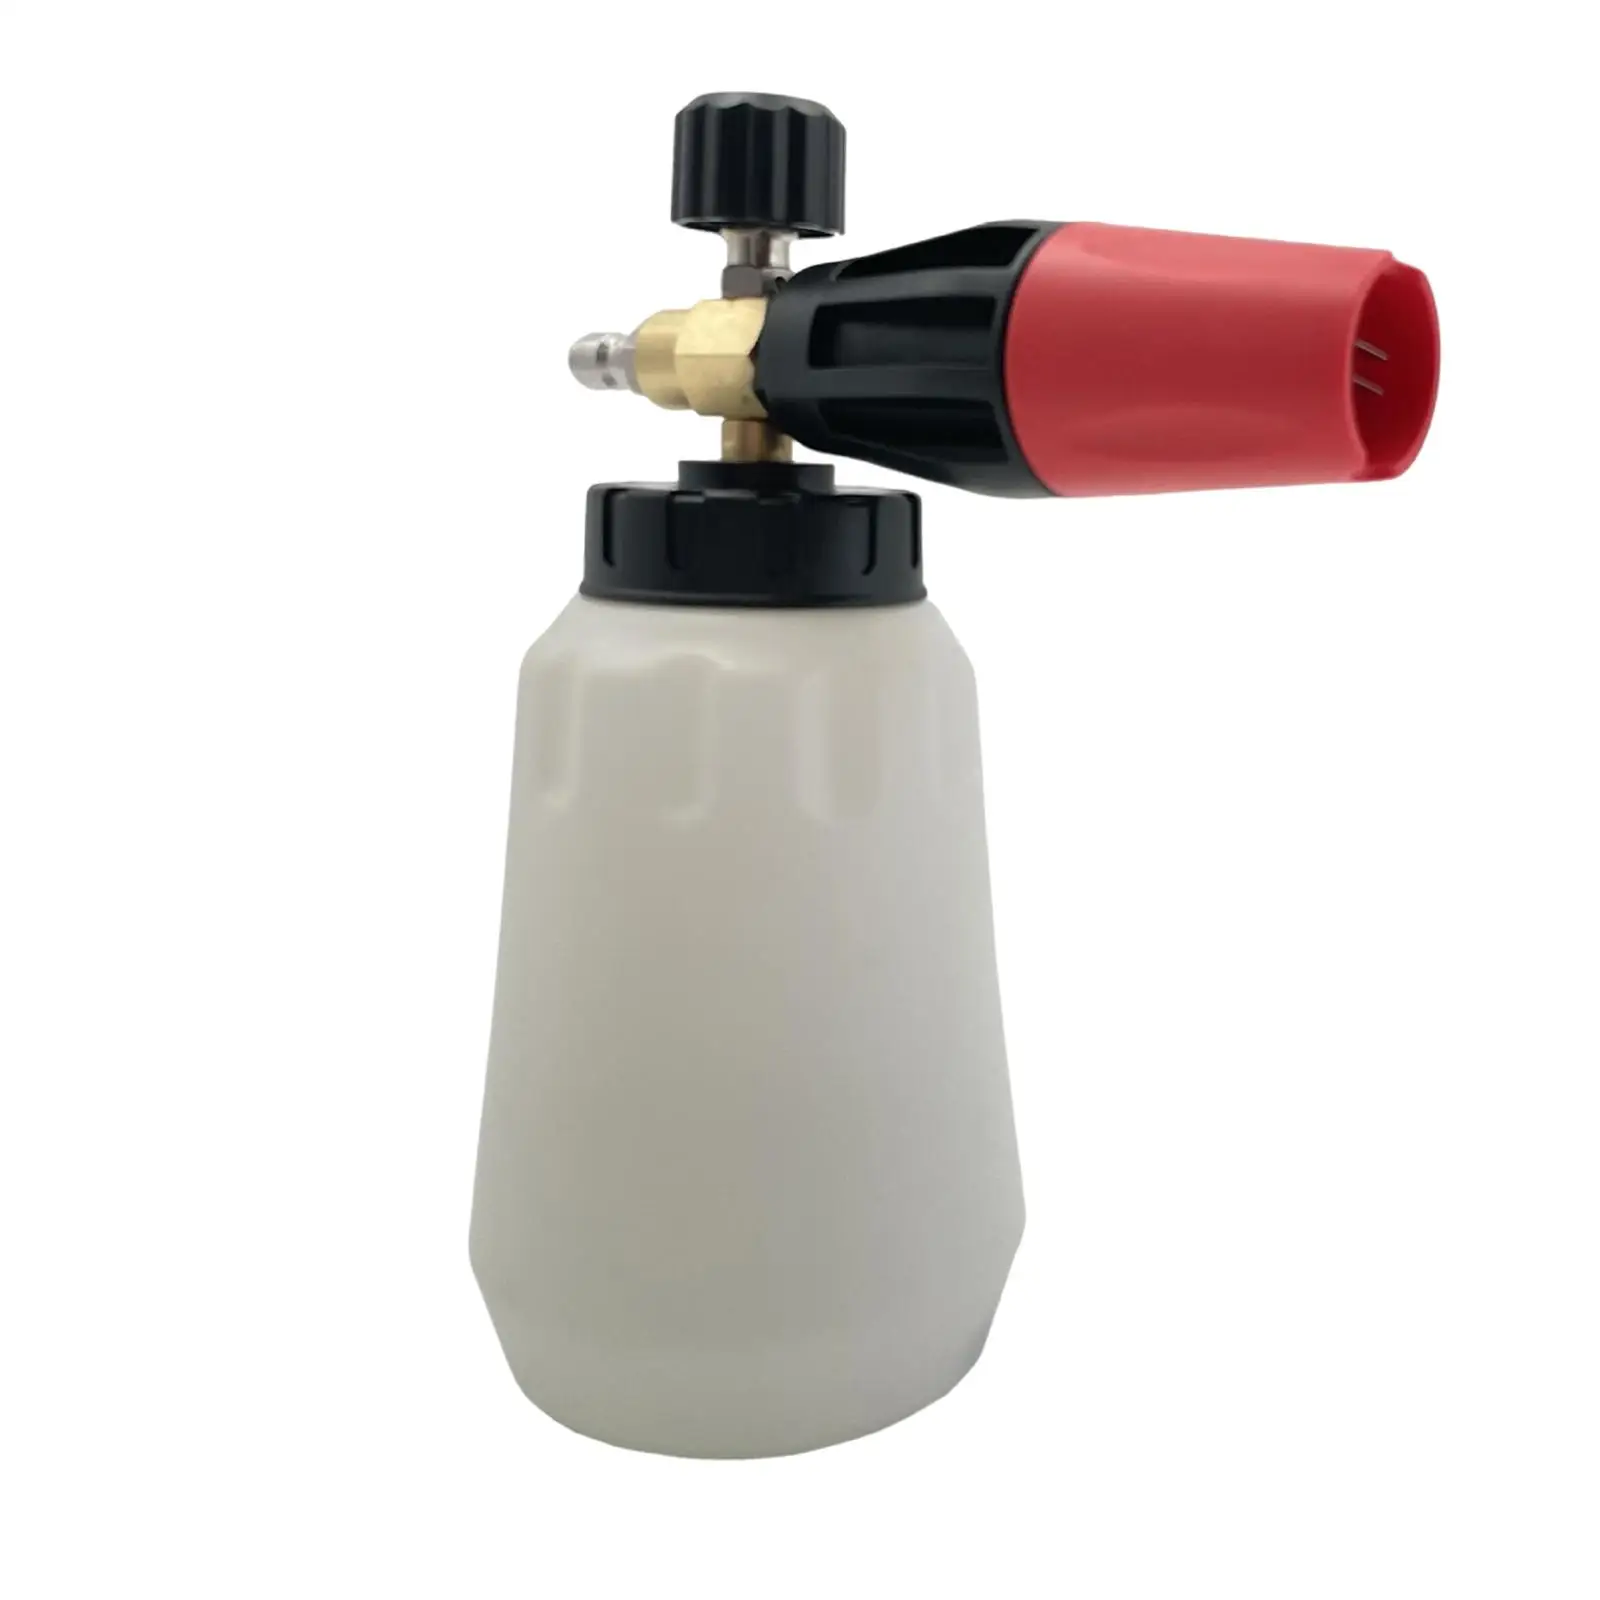 Foam Pressure Bottle, Adjustable  Nozzle Pressure Washer Foam  for Car Washing, House Floor Window Cleaning, 1/4